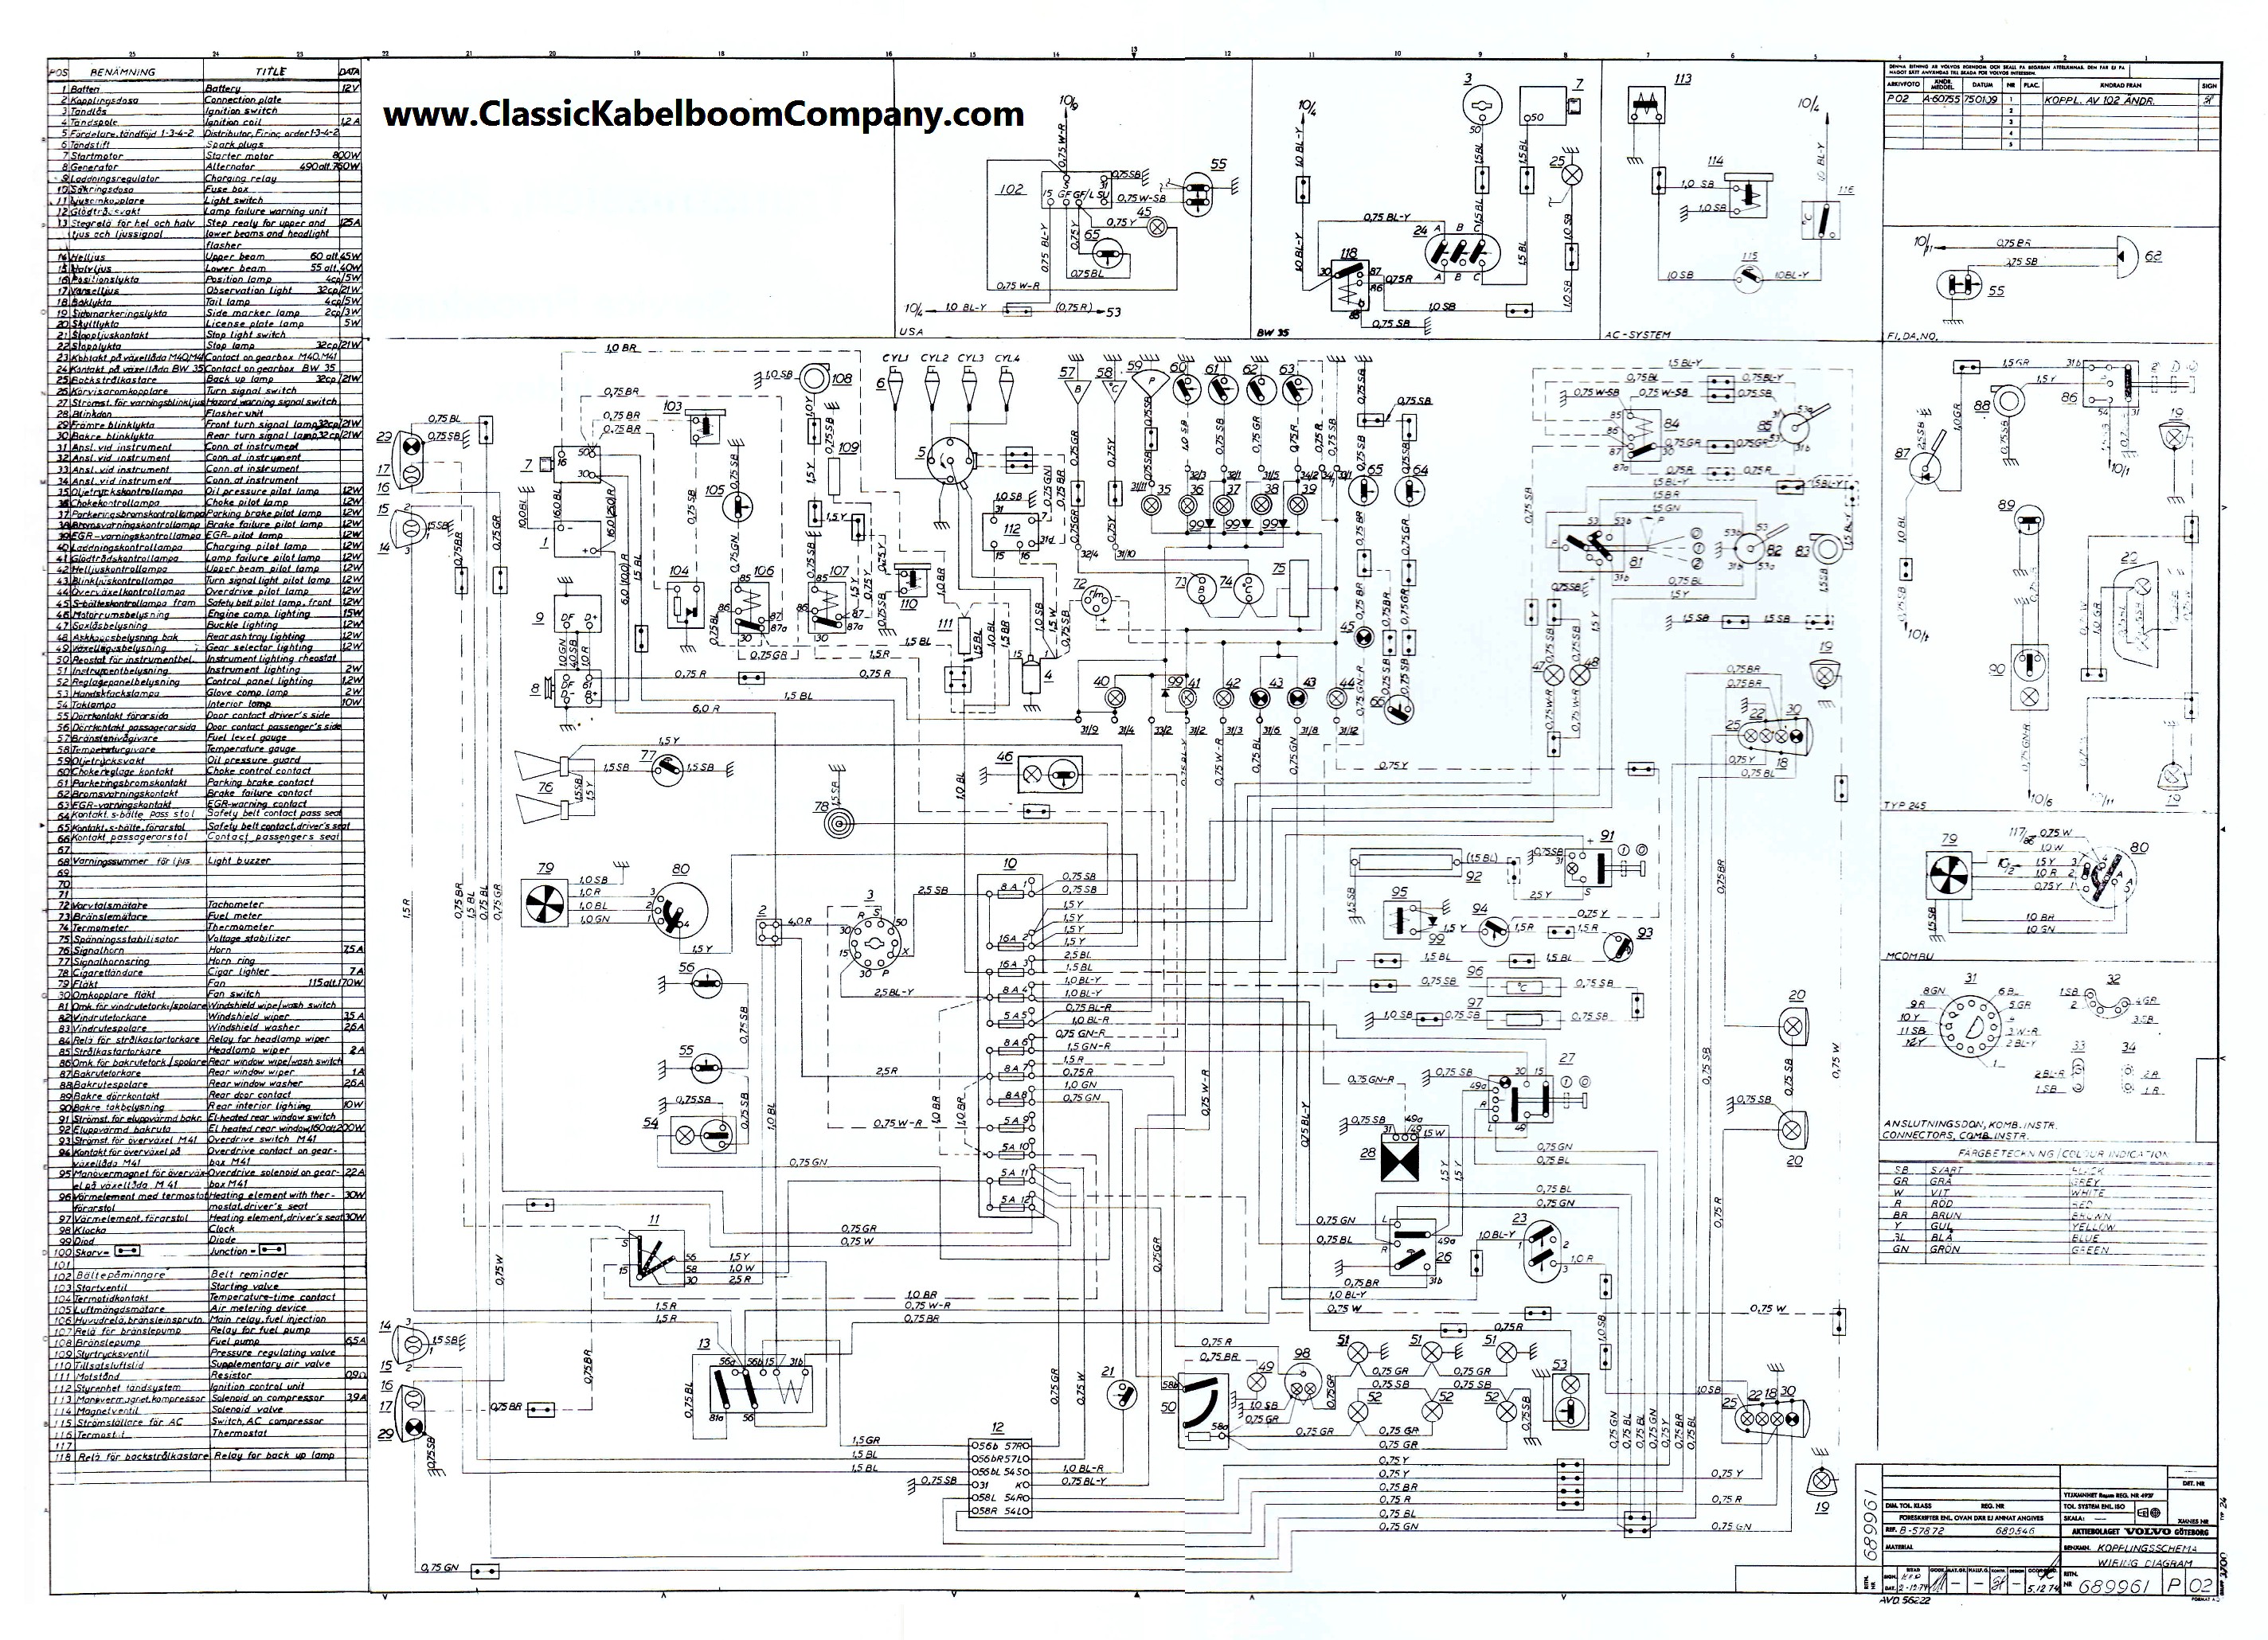 2005 Volvo S40 Engine Diagram Volvo 122 Wiring Diagram Wiring Diagram Of 2005 Volvo S40 Engine Diagram